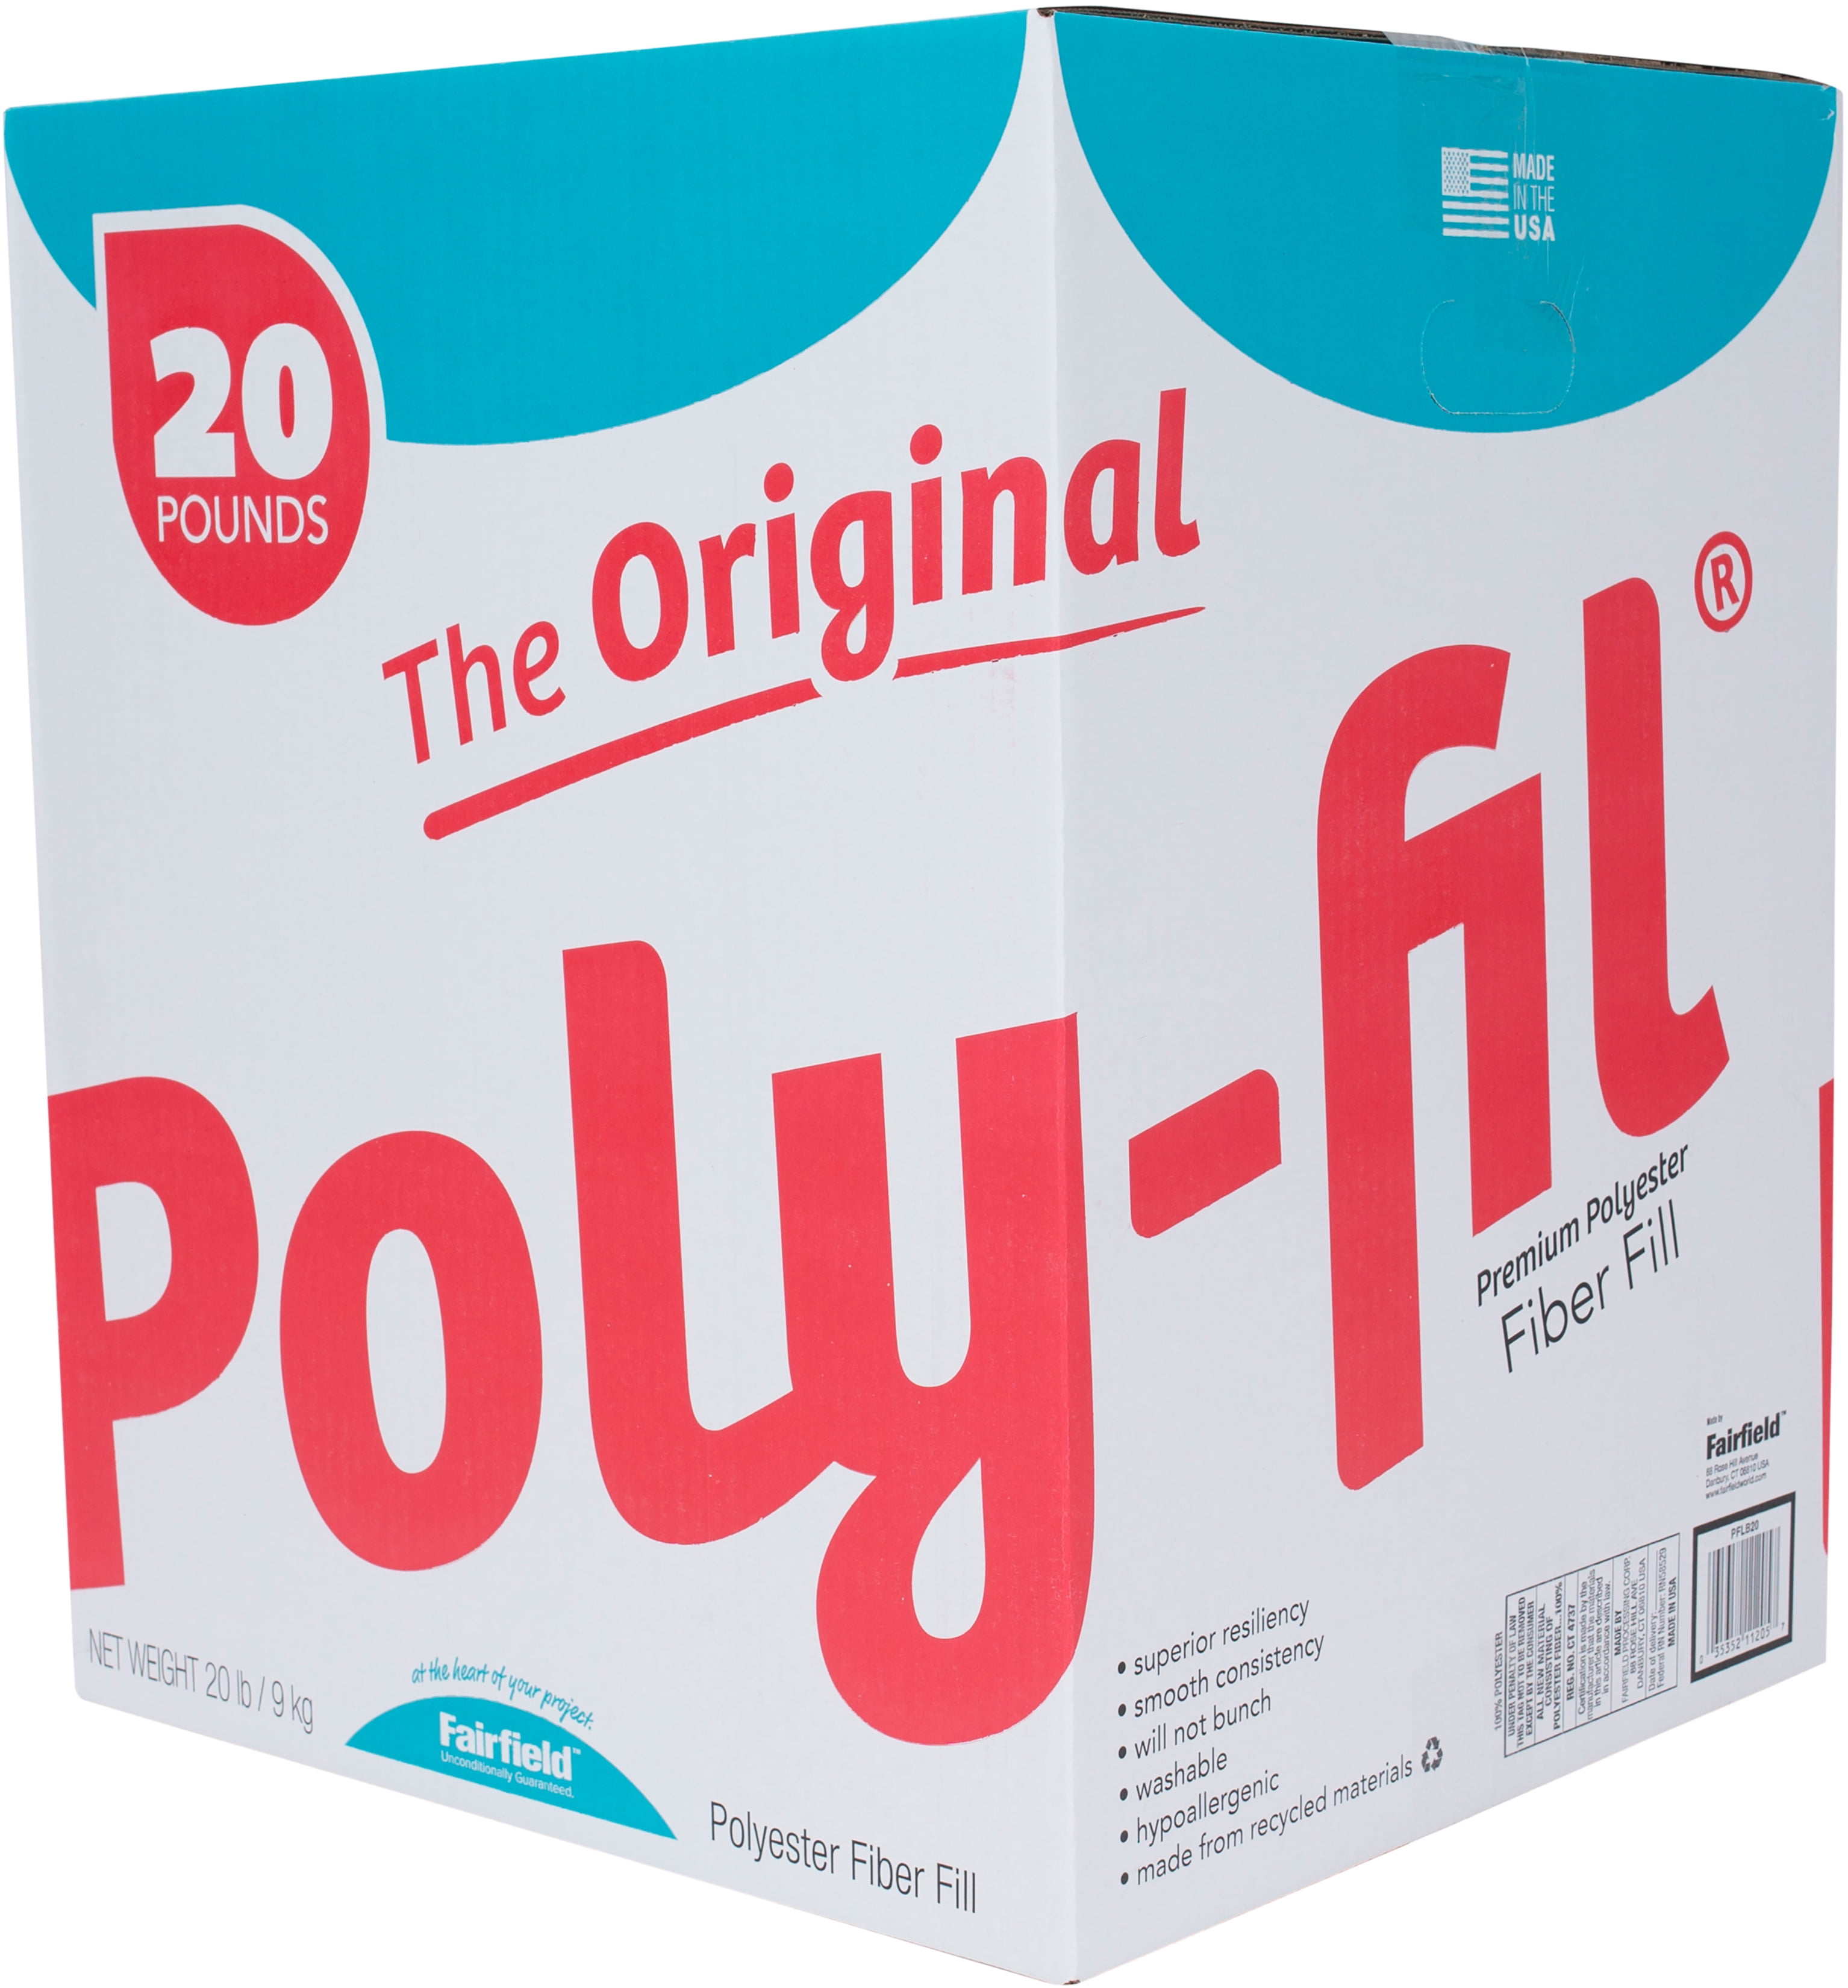 Fairfield PF-10 The Original Poly-Fil Premium 100% Fiber Fill Box, White, 10 lb